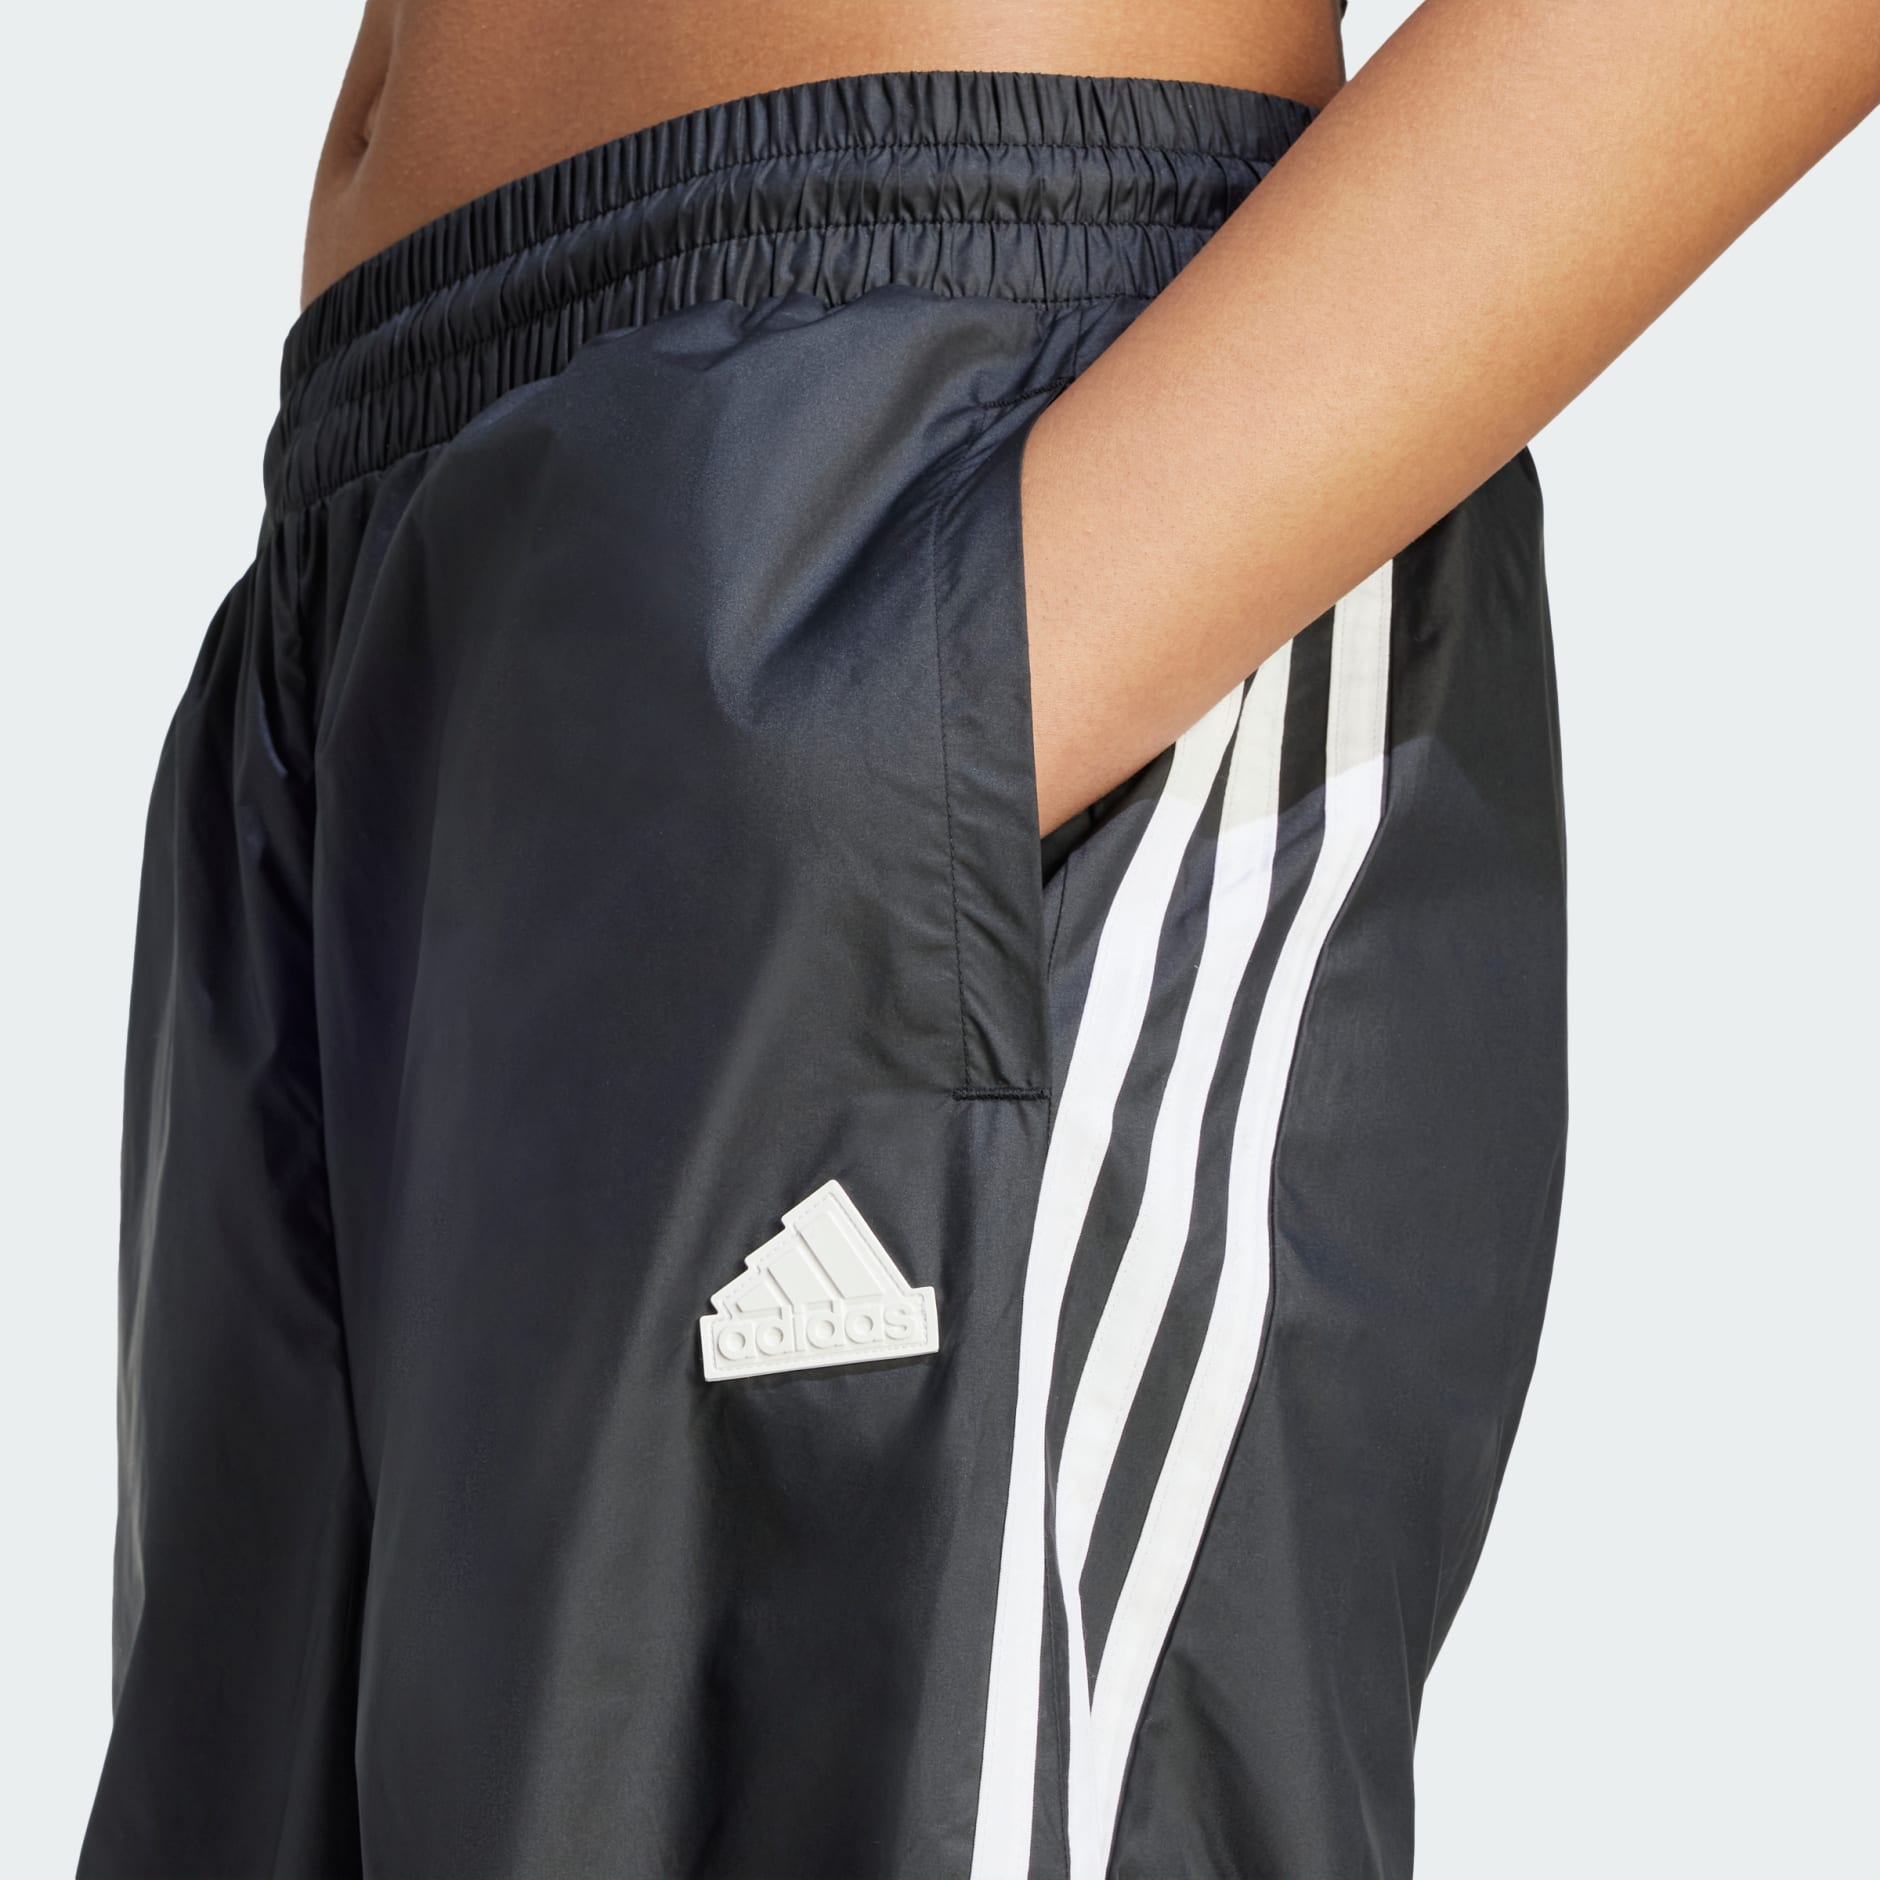 adidas Men's Essentials 3-Stripes Wind Pants, Black/White, X-Large Short :  : Sports & Outdoors